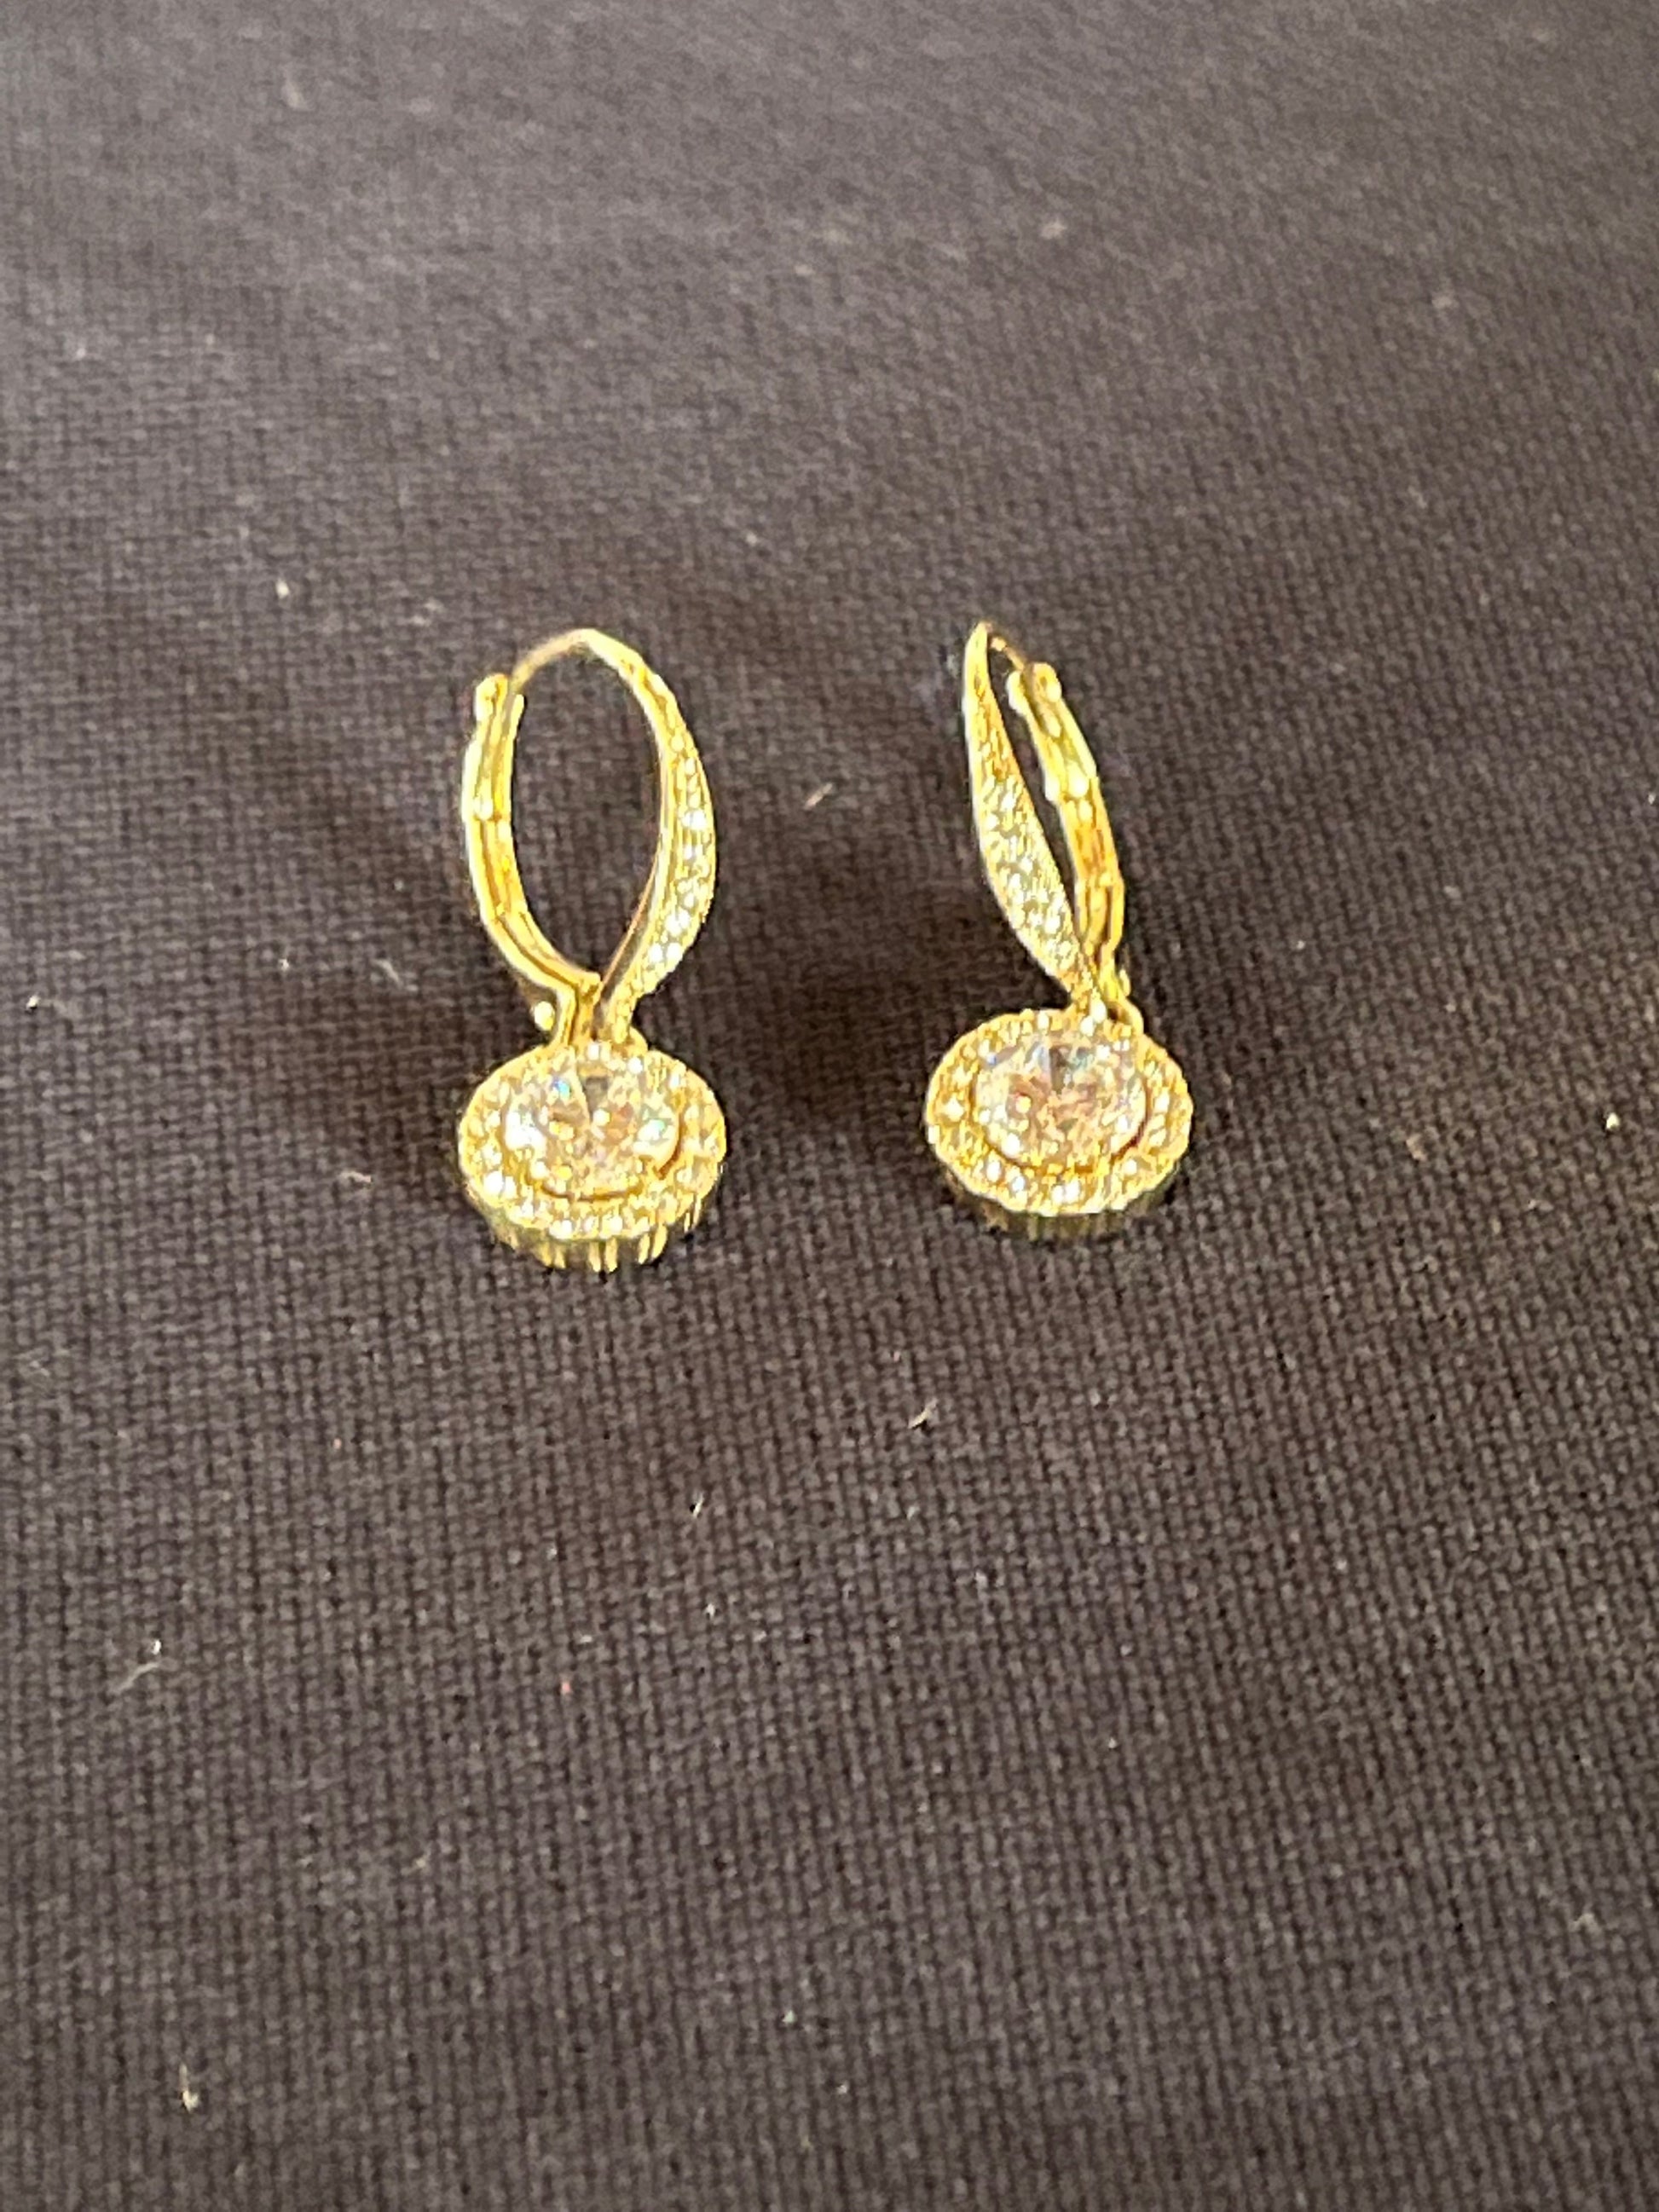 VEEP: Selina's Gold Earrings